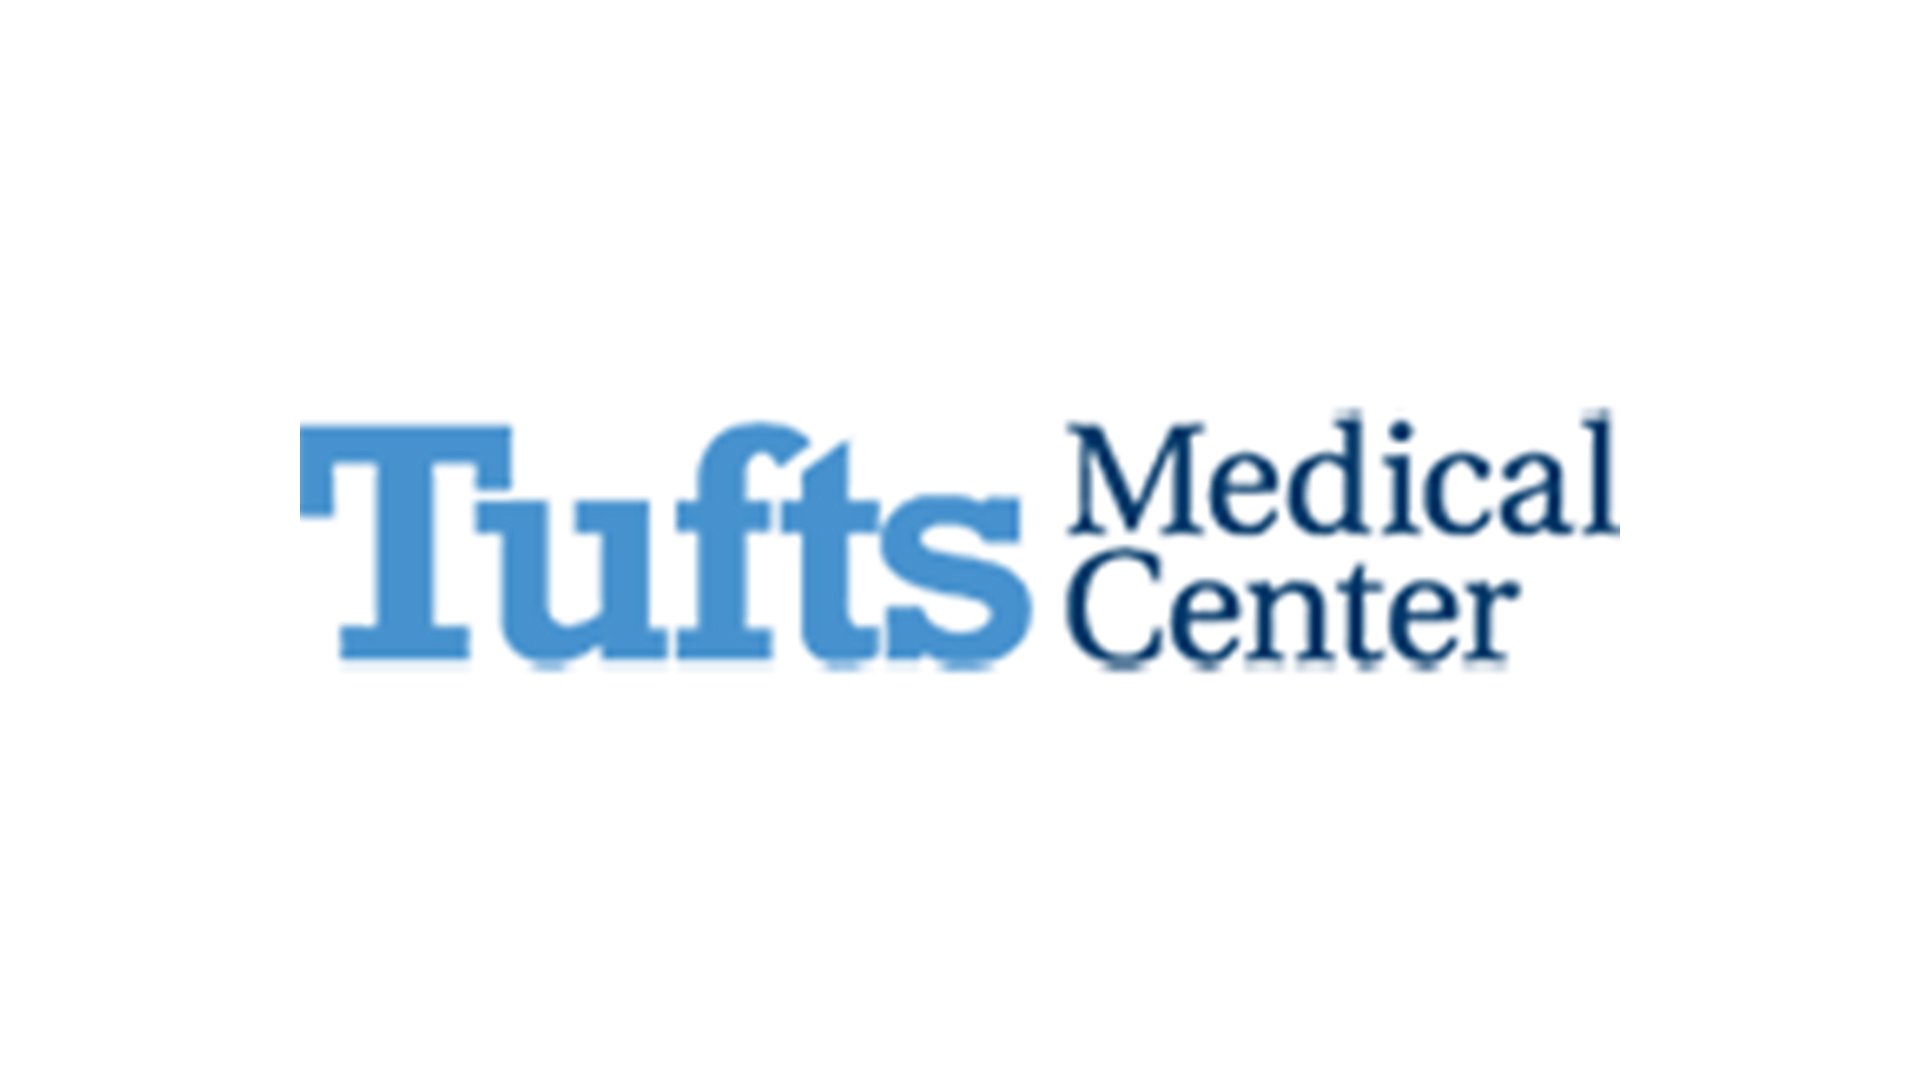 CEOi_0014_Tufts Medical Center.jpg